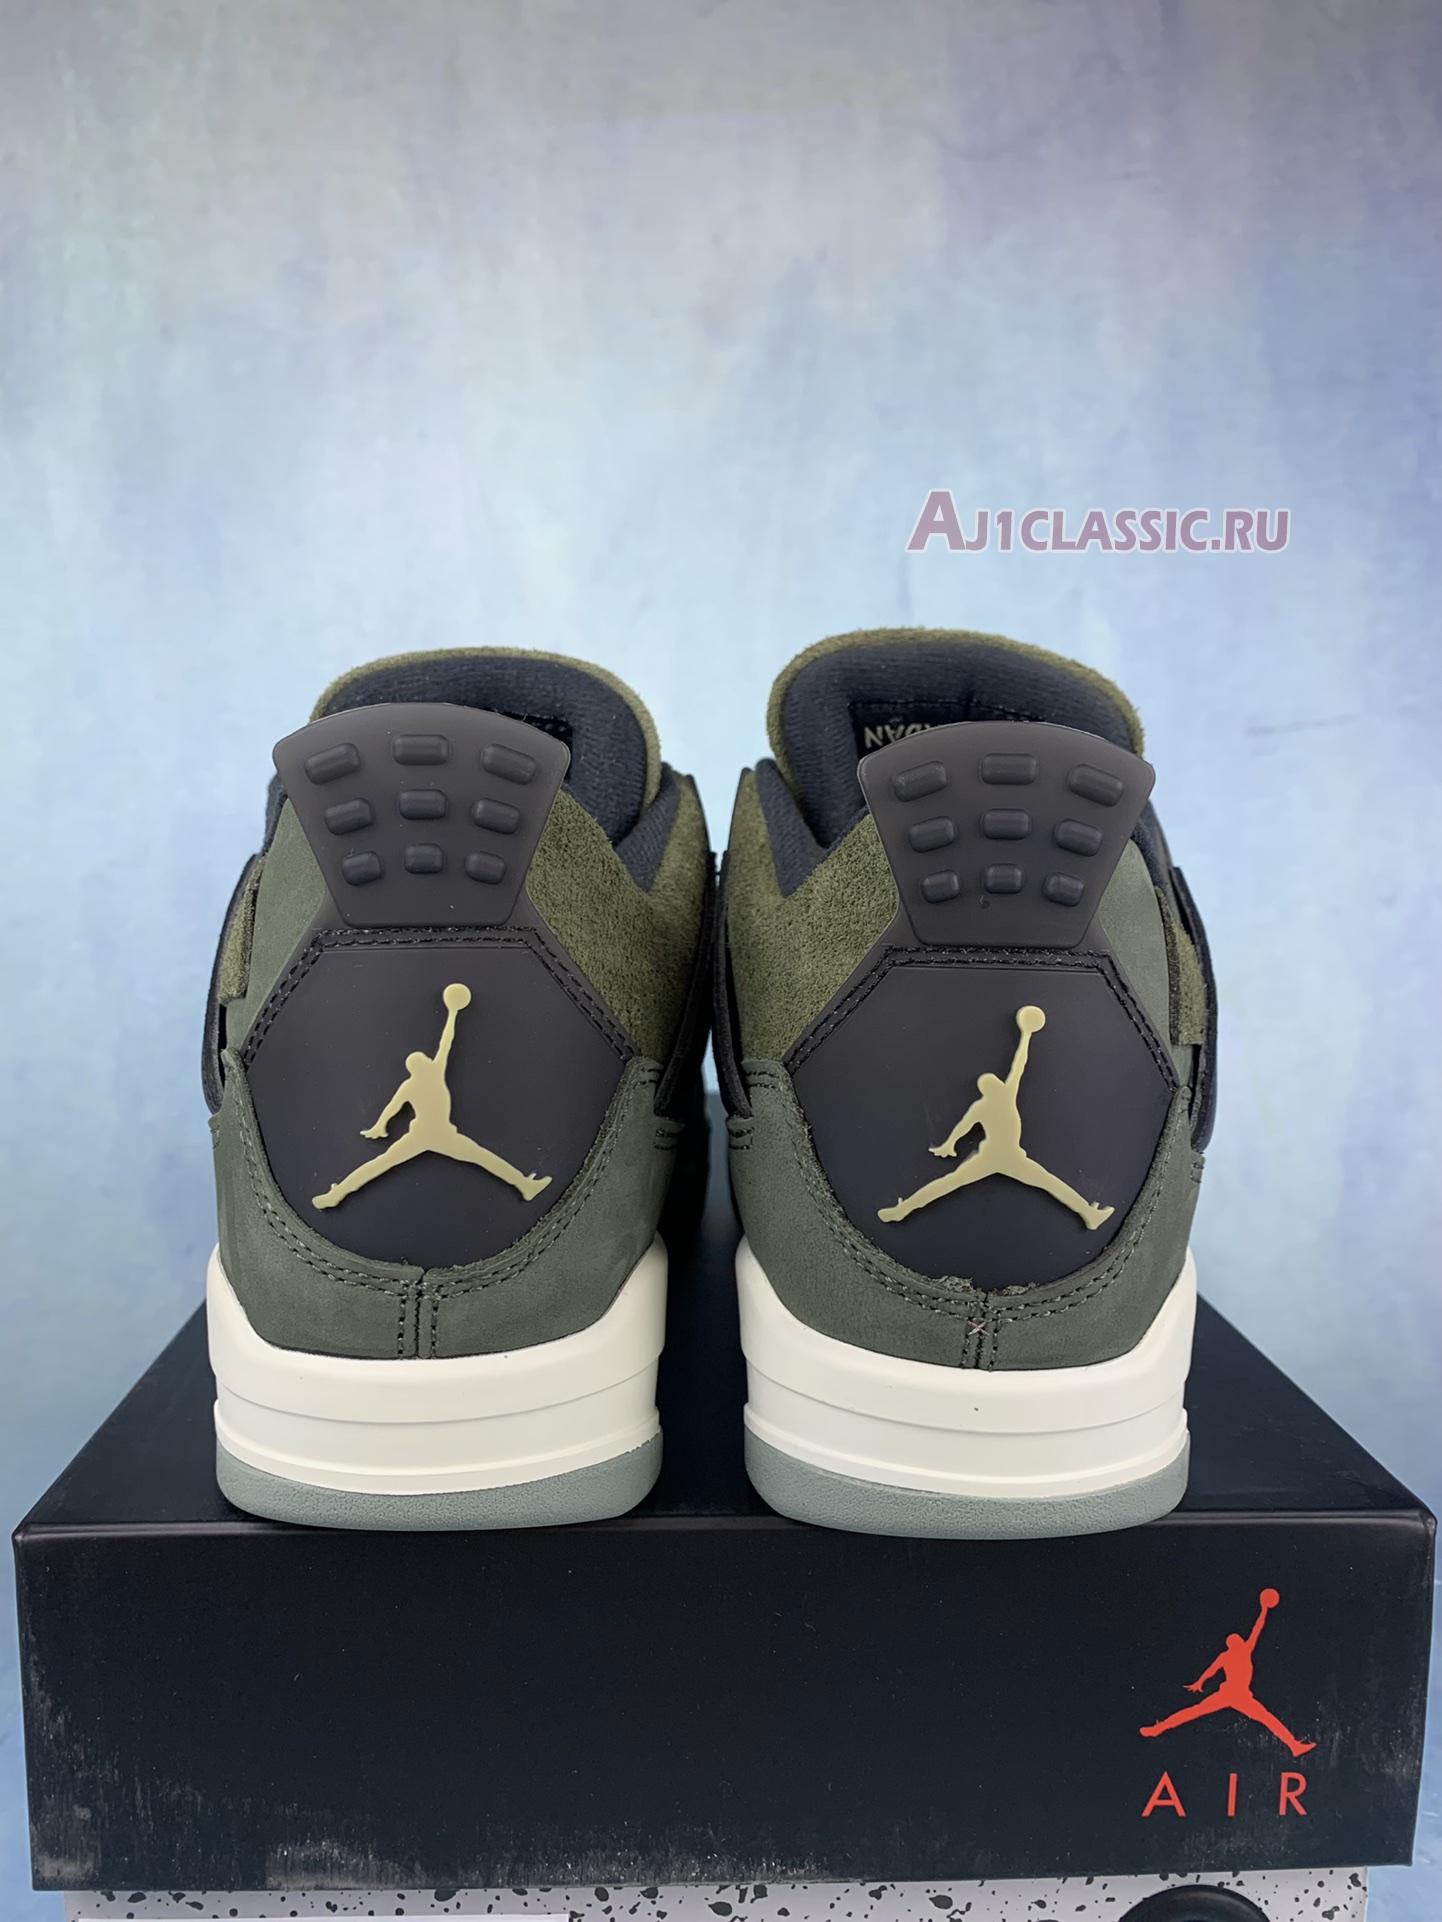 Air Jordan 4 Craft "Medium Olive" FB9927-200